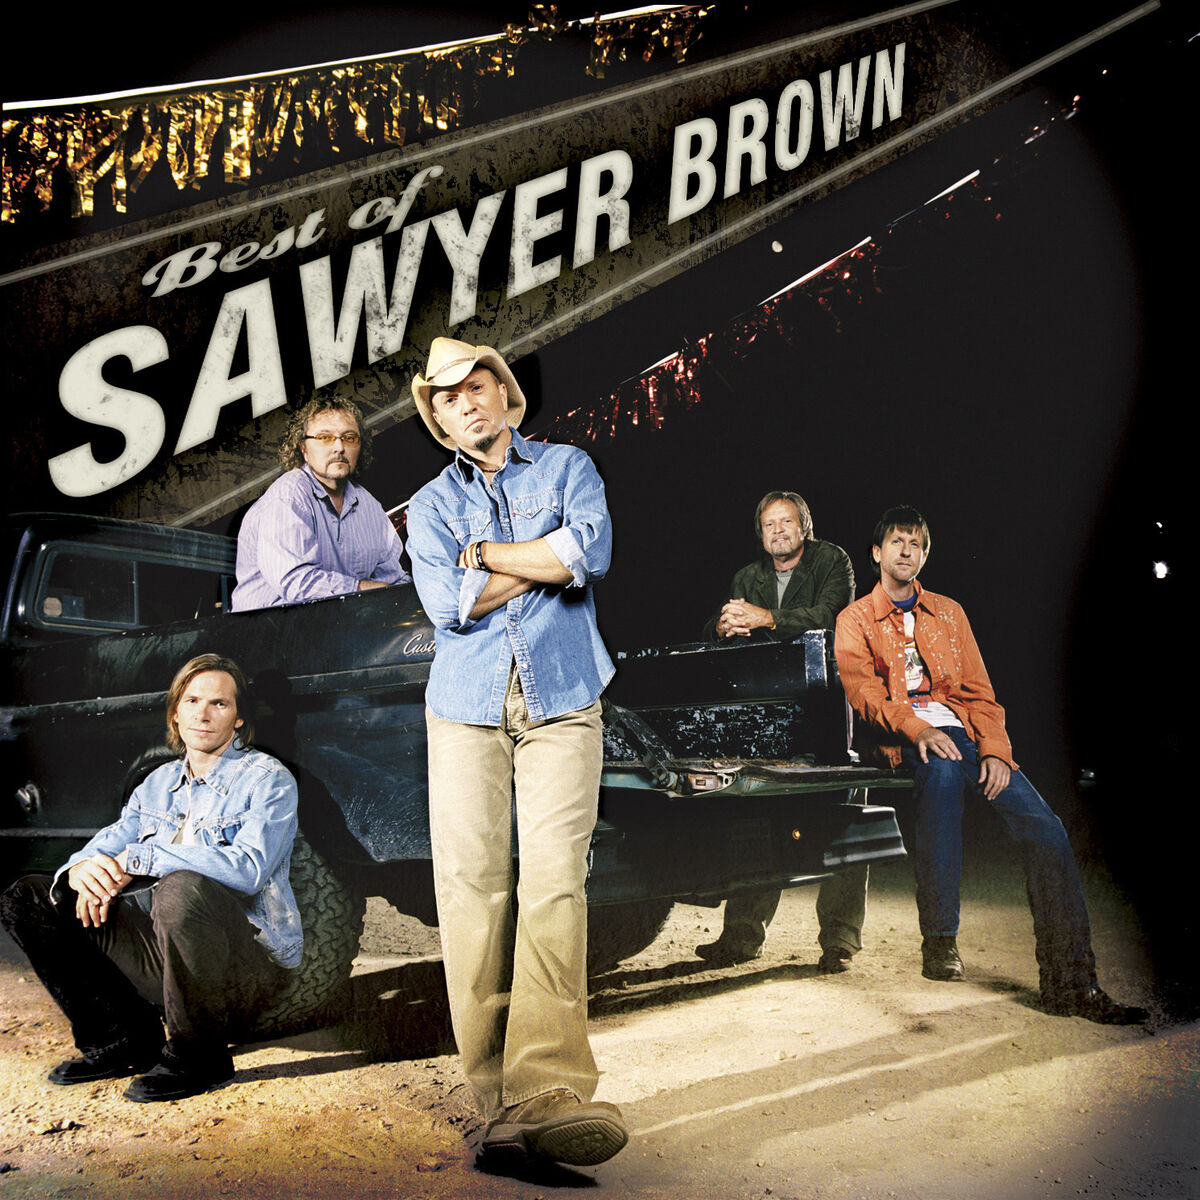 Sawyer Brown: albums